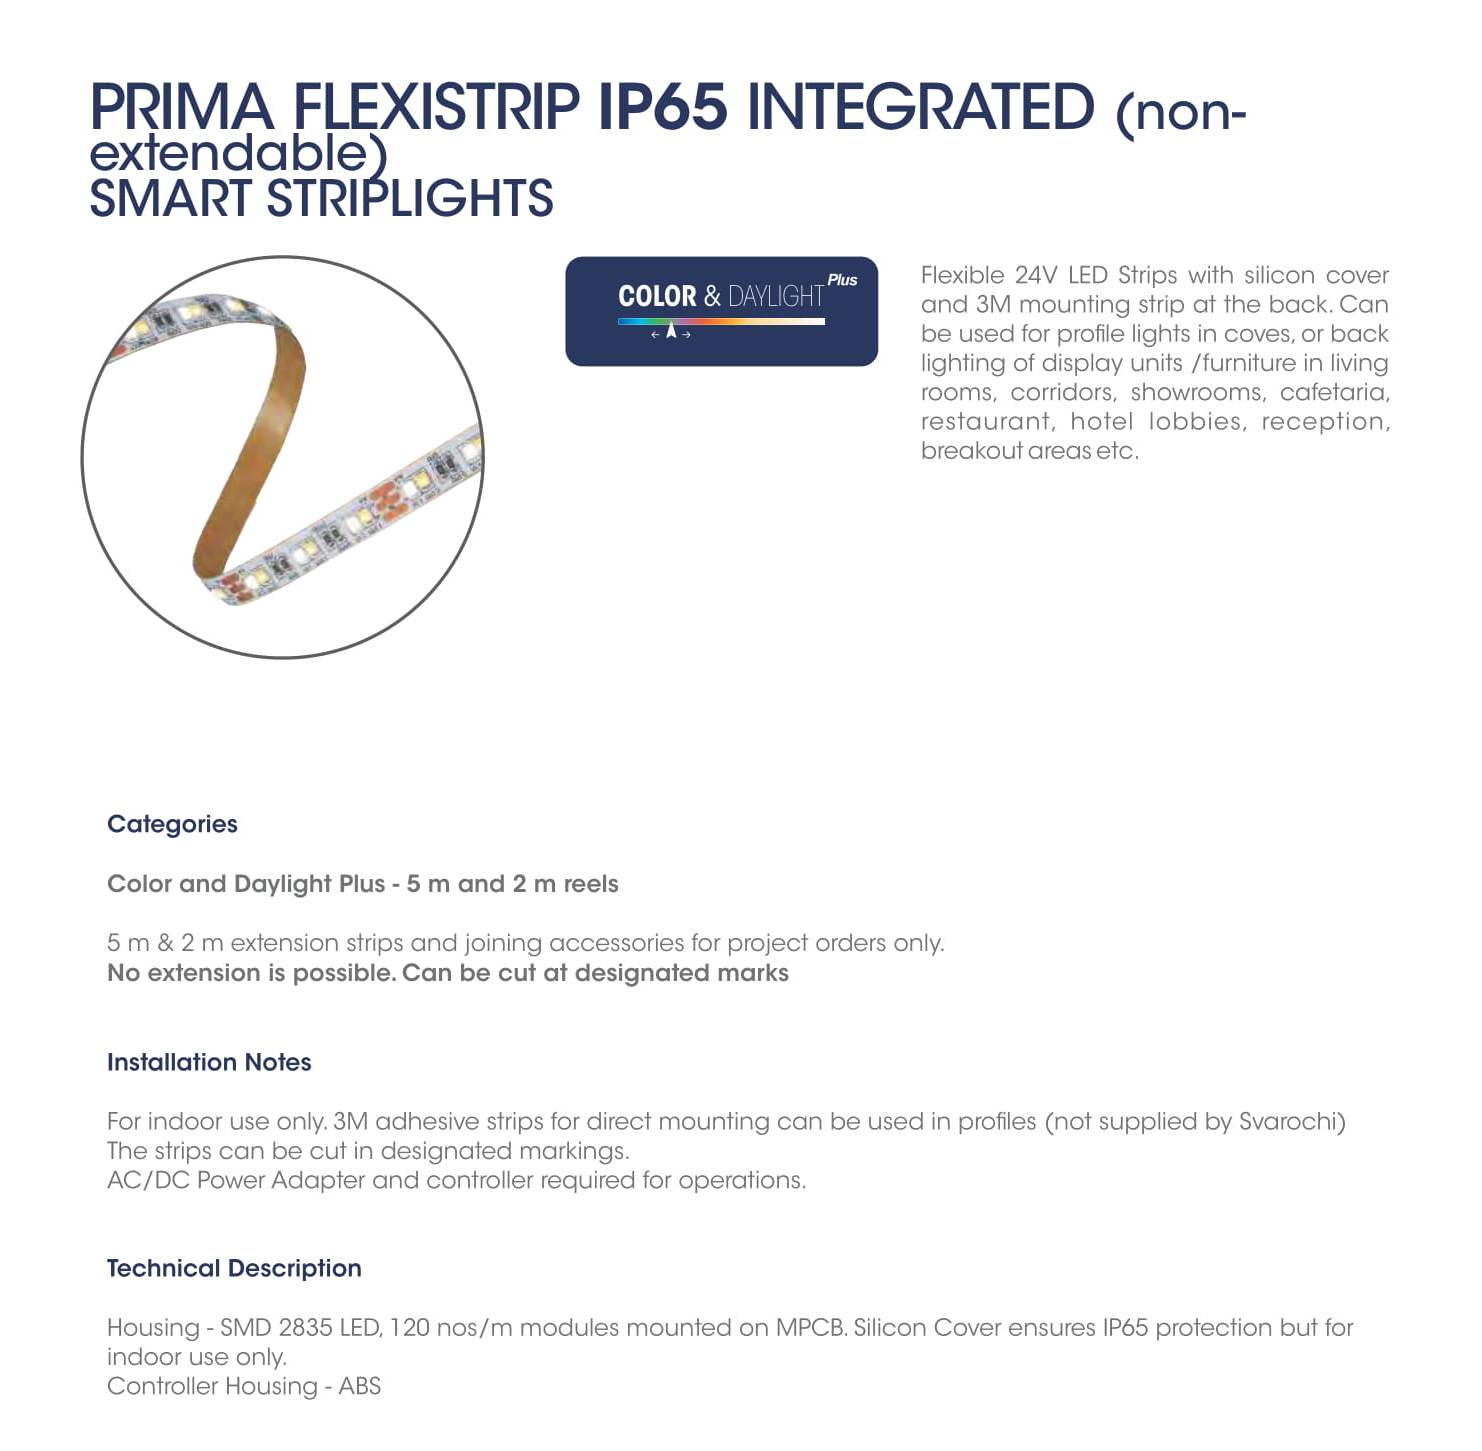 Prima Flexistrip IP65 Integrated (non-extendable) Smart Striplights